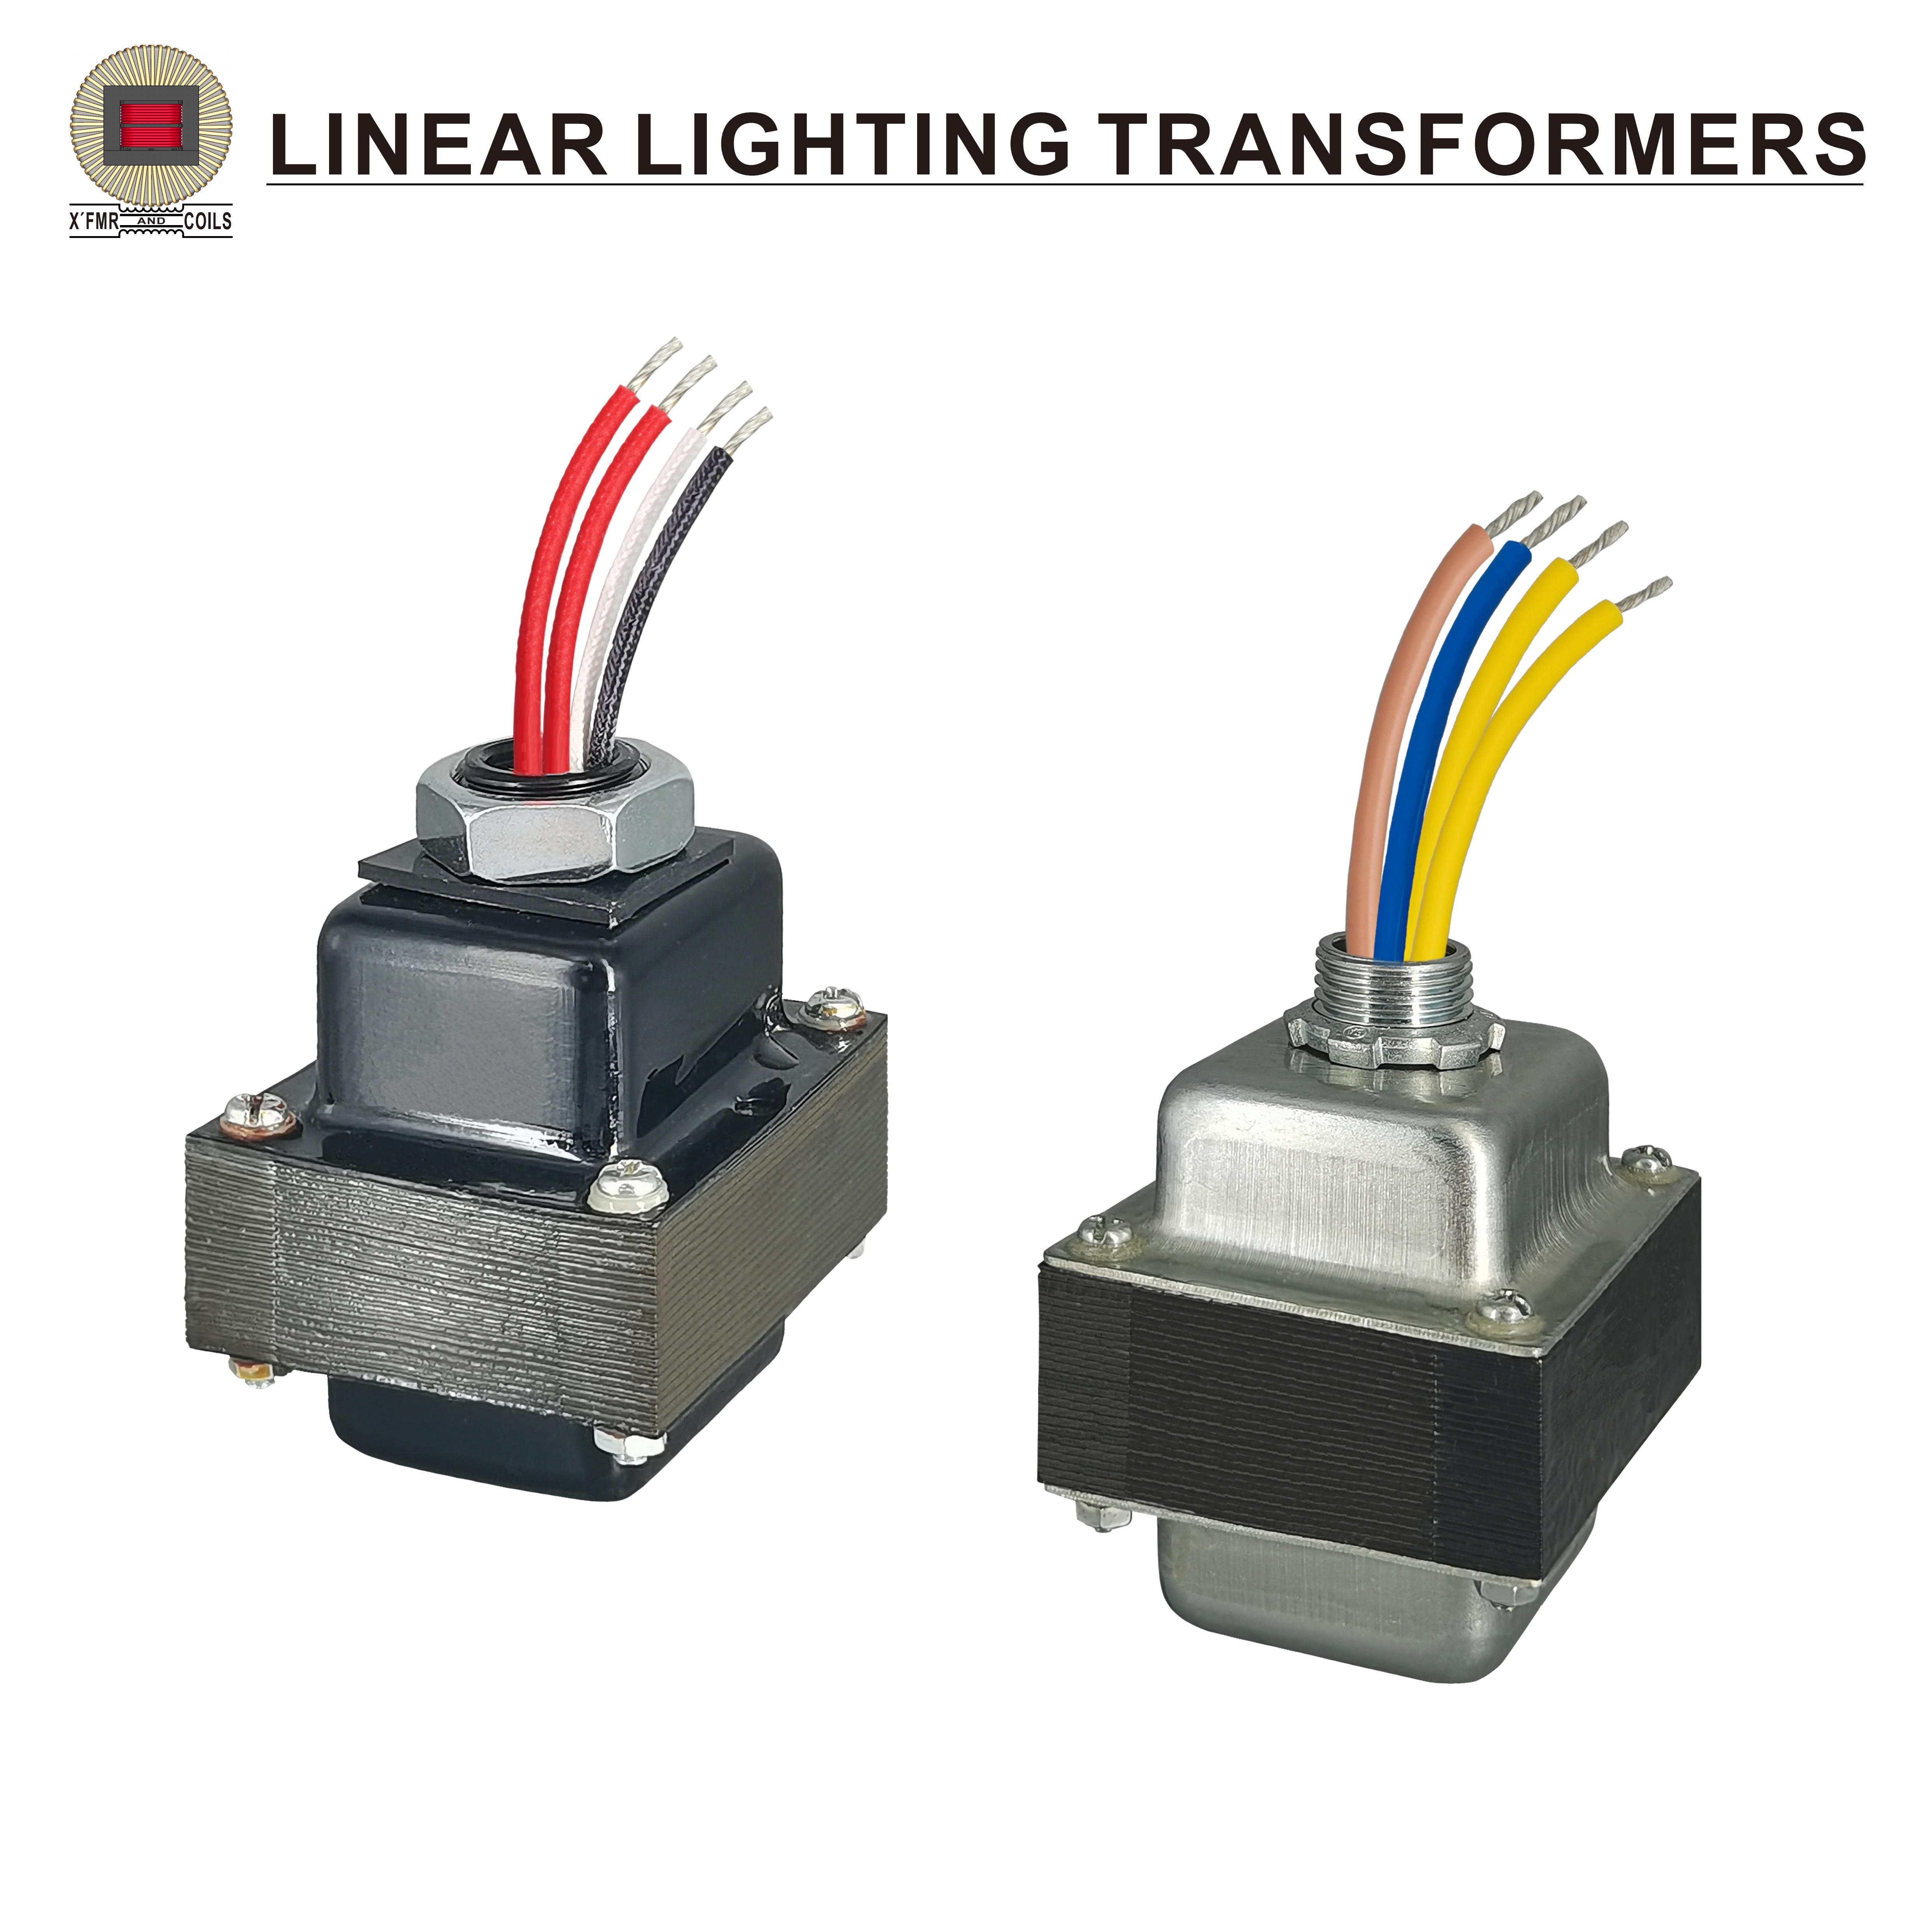 Linear Lighting Transformers LLT-01 Series